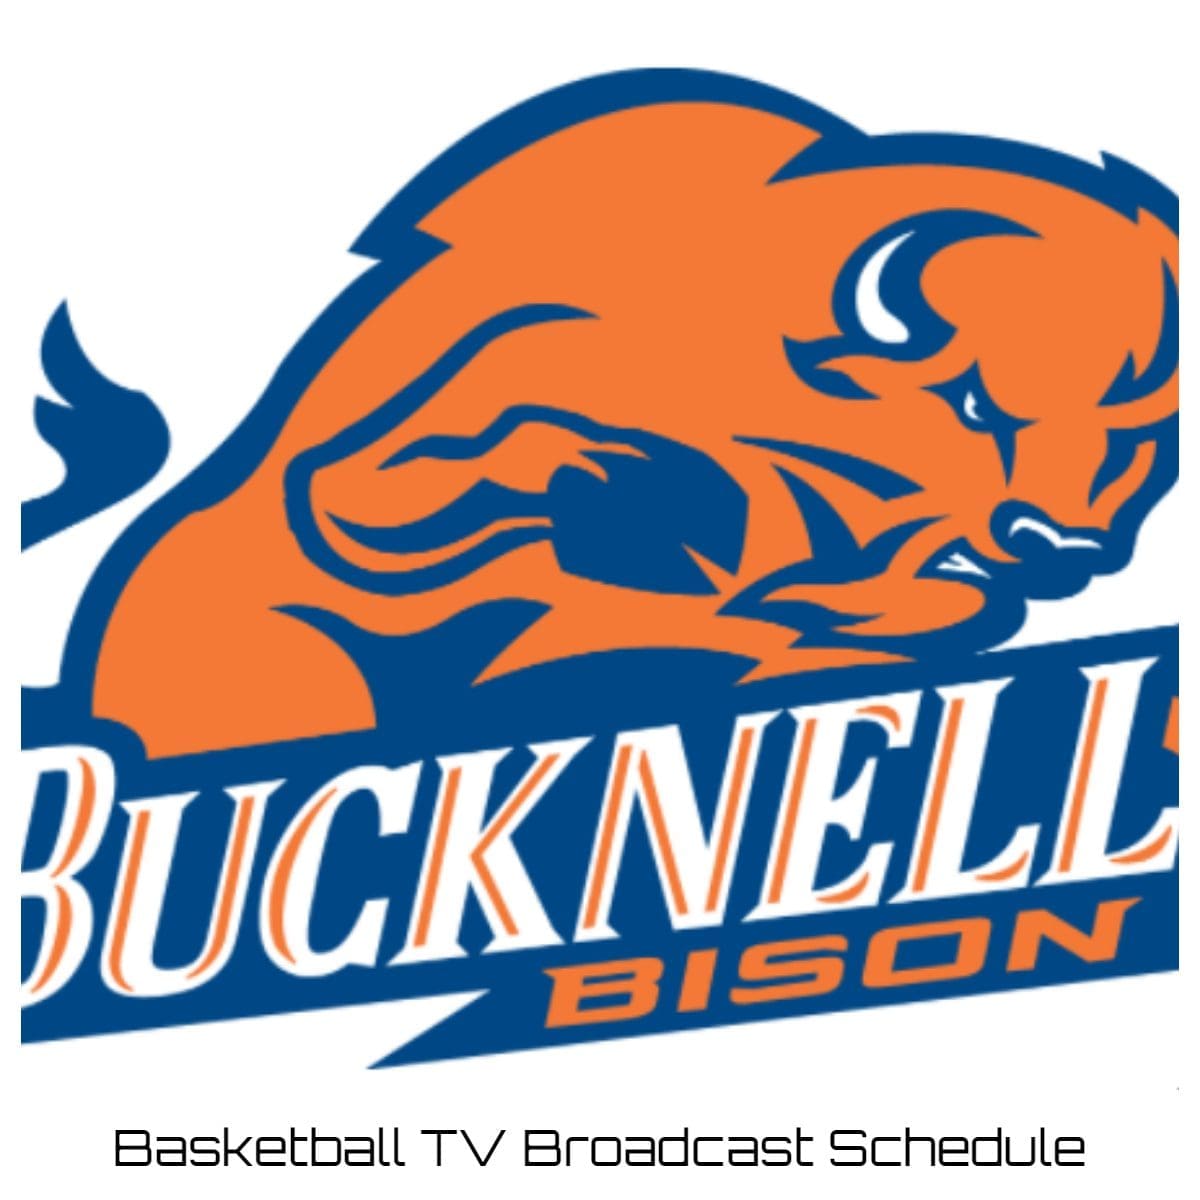 Bucknell Bison Basketball TV Broadcast Schedule